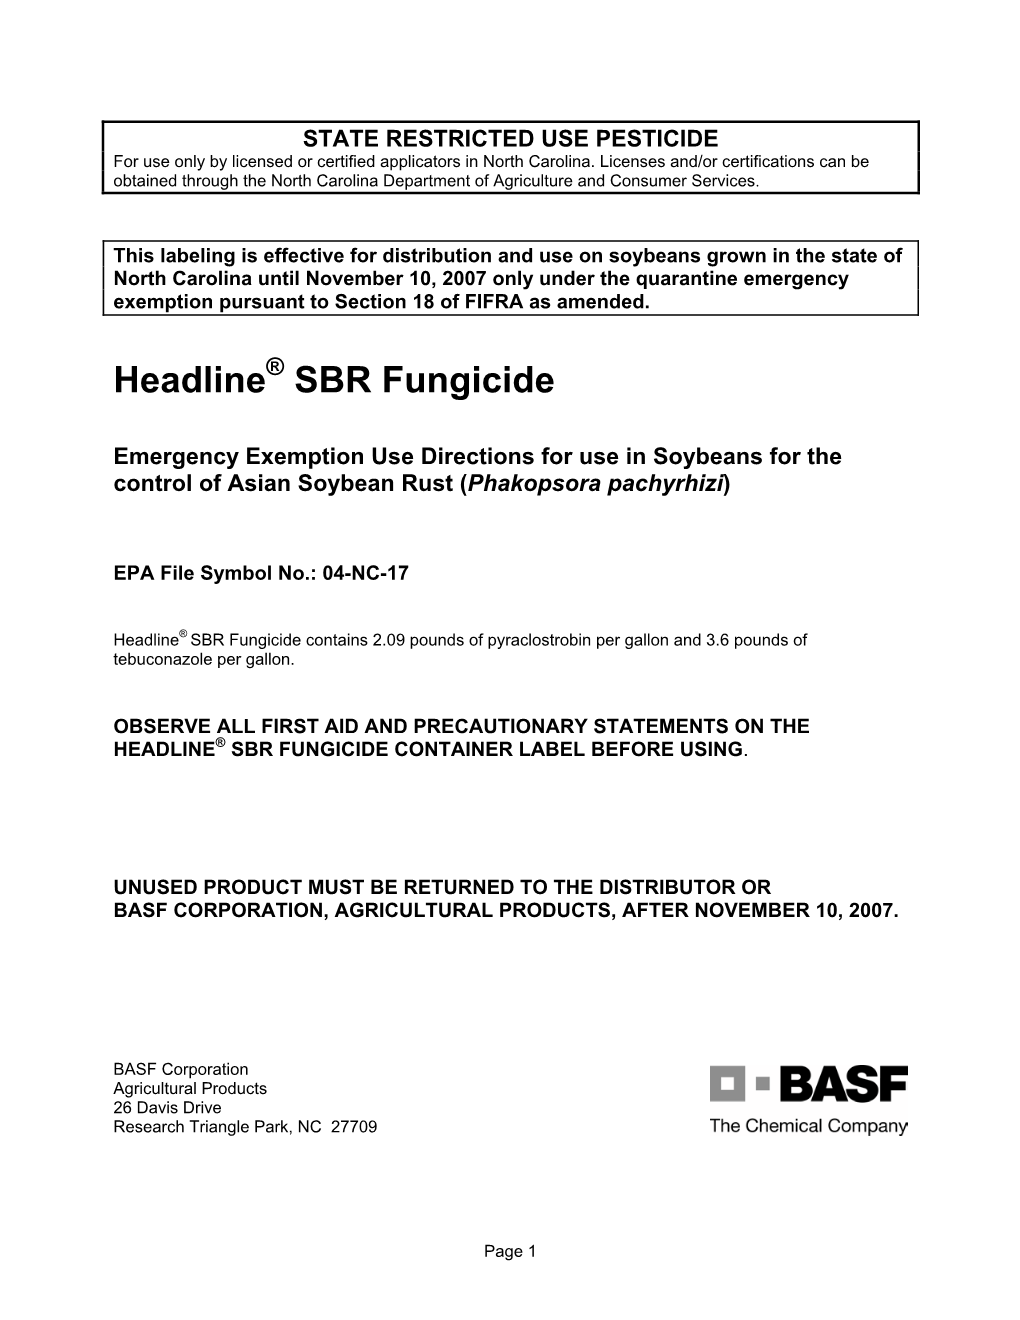 Headline SBR Fungicide